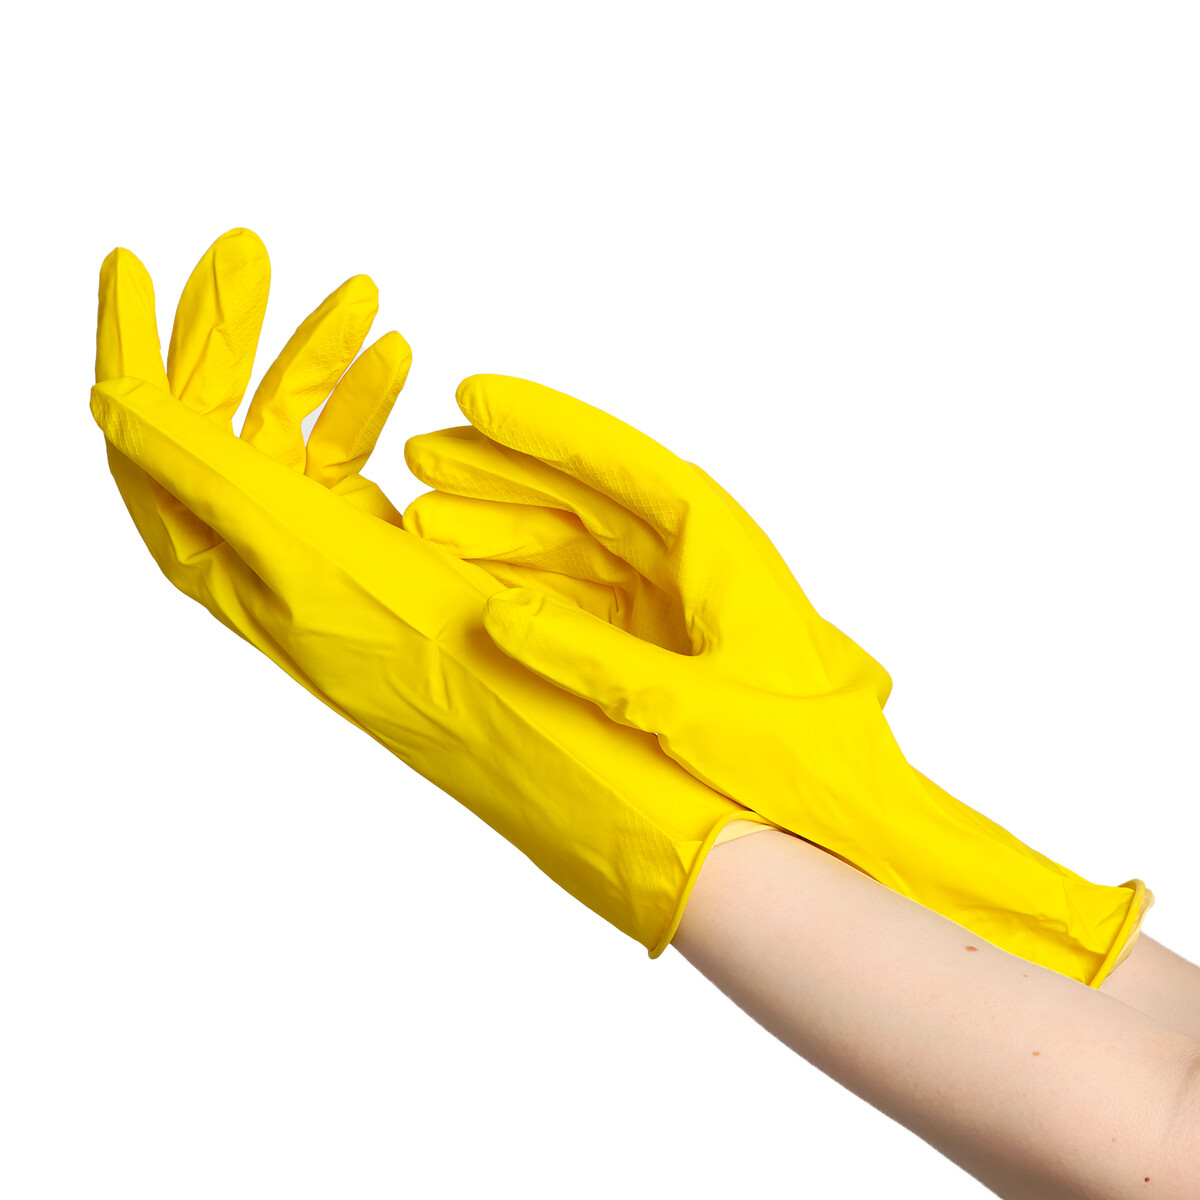 Перчатки латексные хозяйственны размер m, 30 гр, цвет желтый перчатки хозяйственные латексные доляна 2 пары размер s 28 г хб напыление желтый